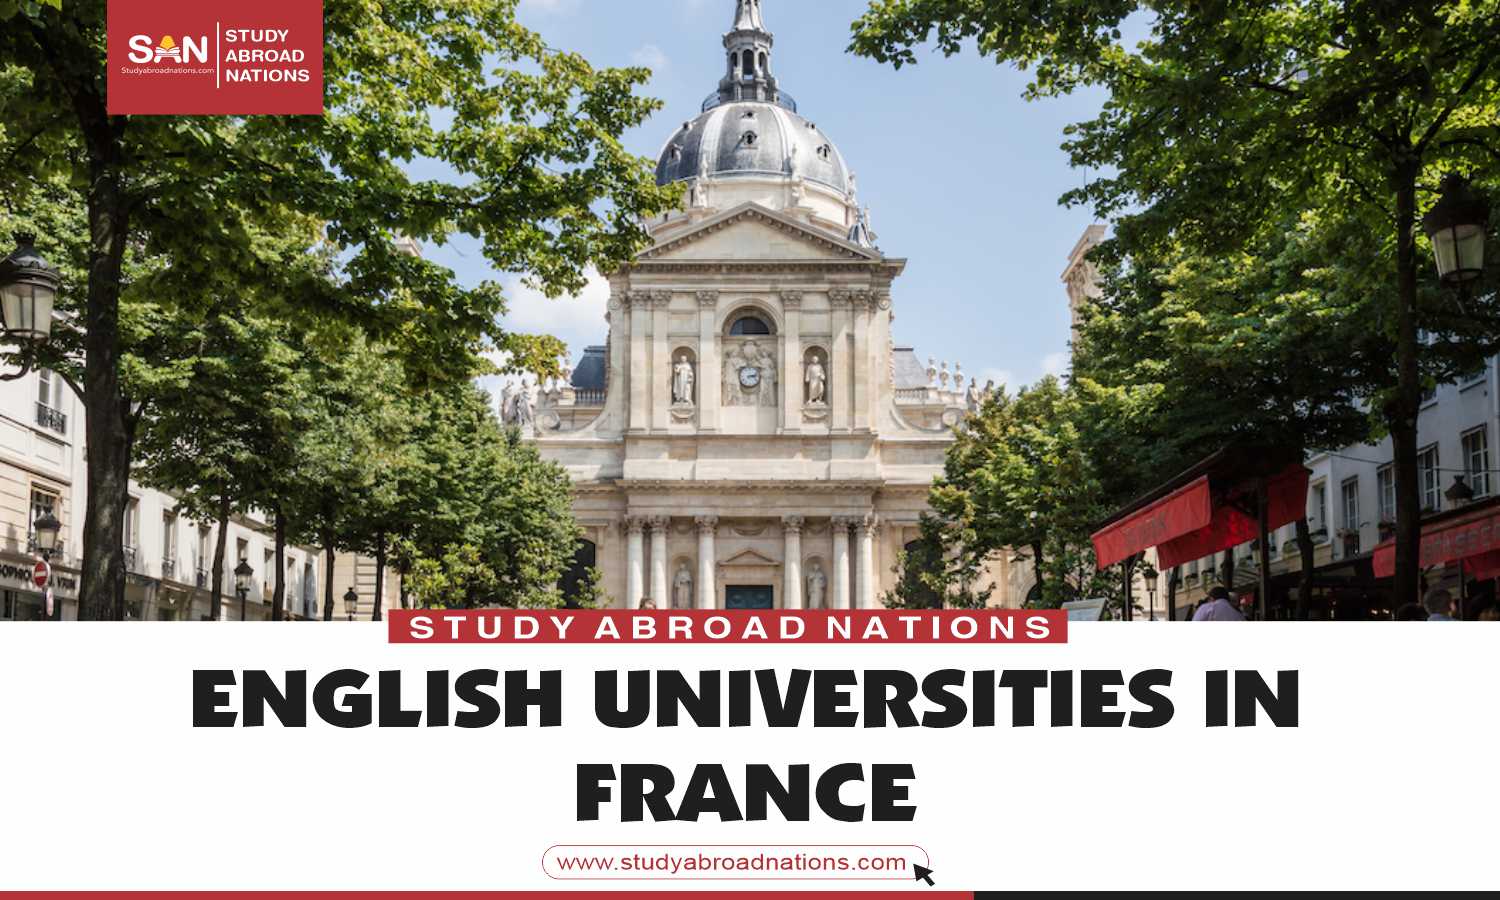 Названия университетов на английском. Реклама университета на английском. Университет Андорры. Английский университет во Франции. Страсбургский университет Франция.